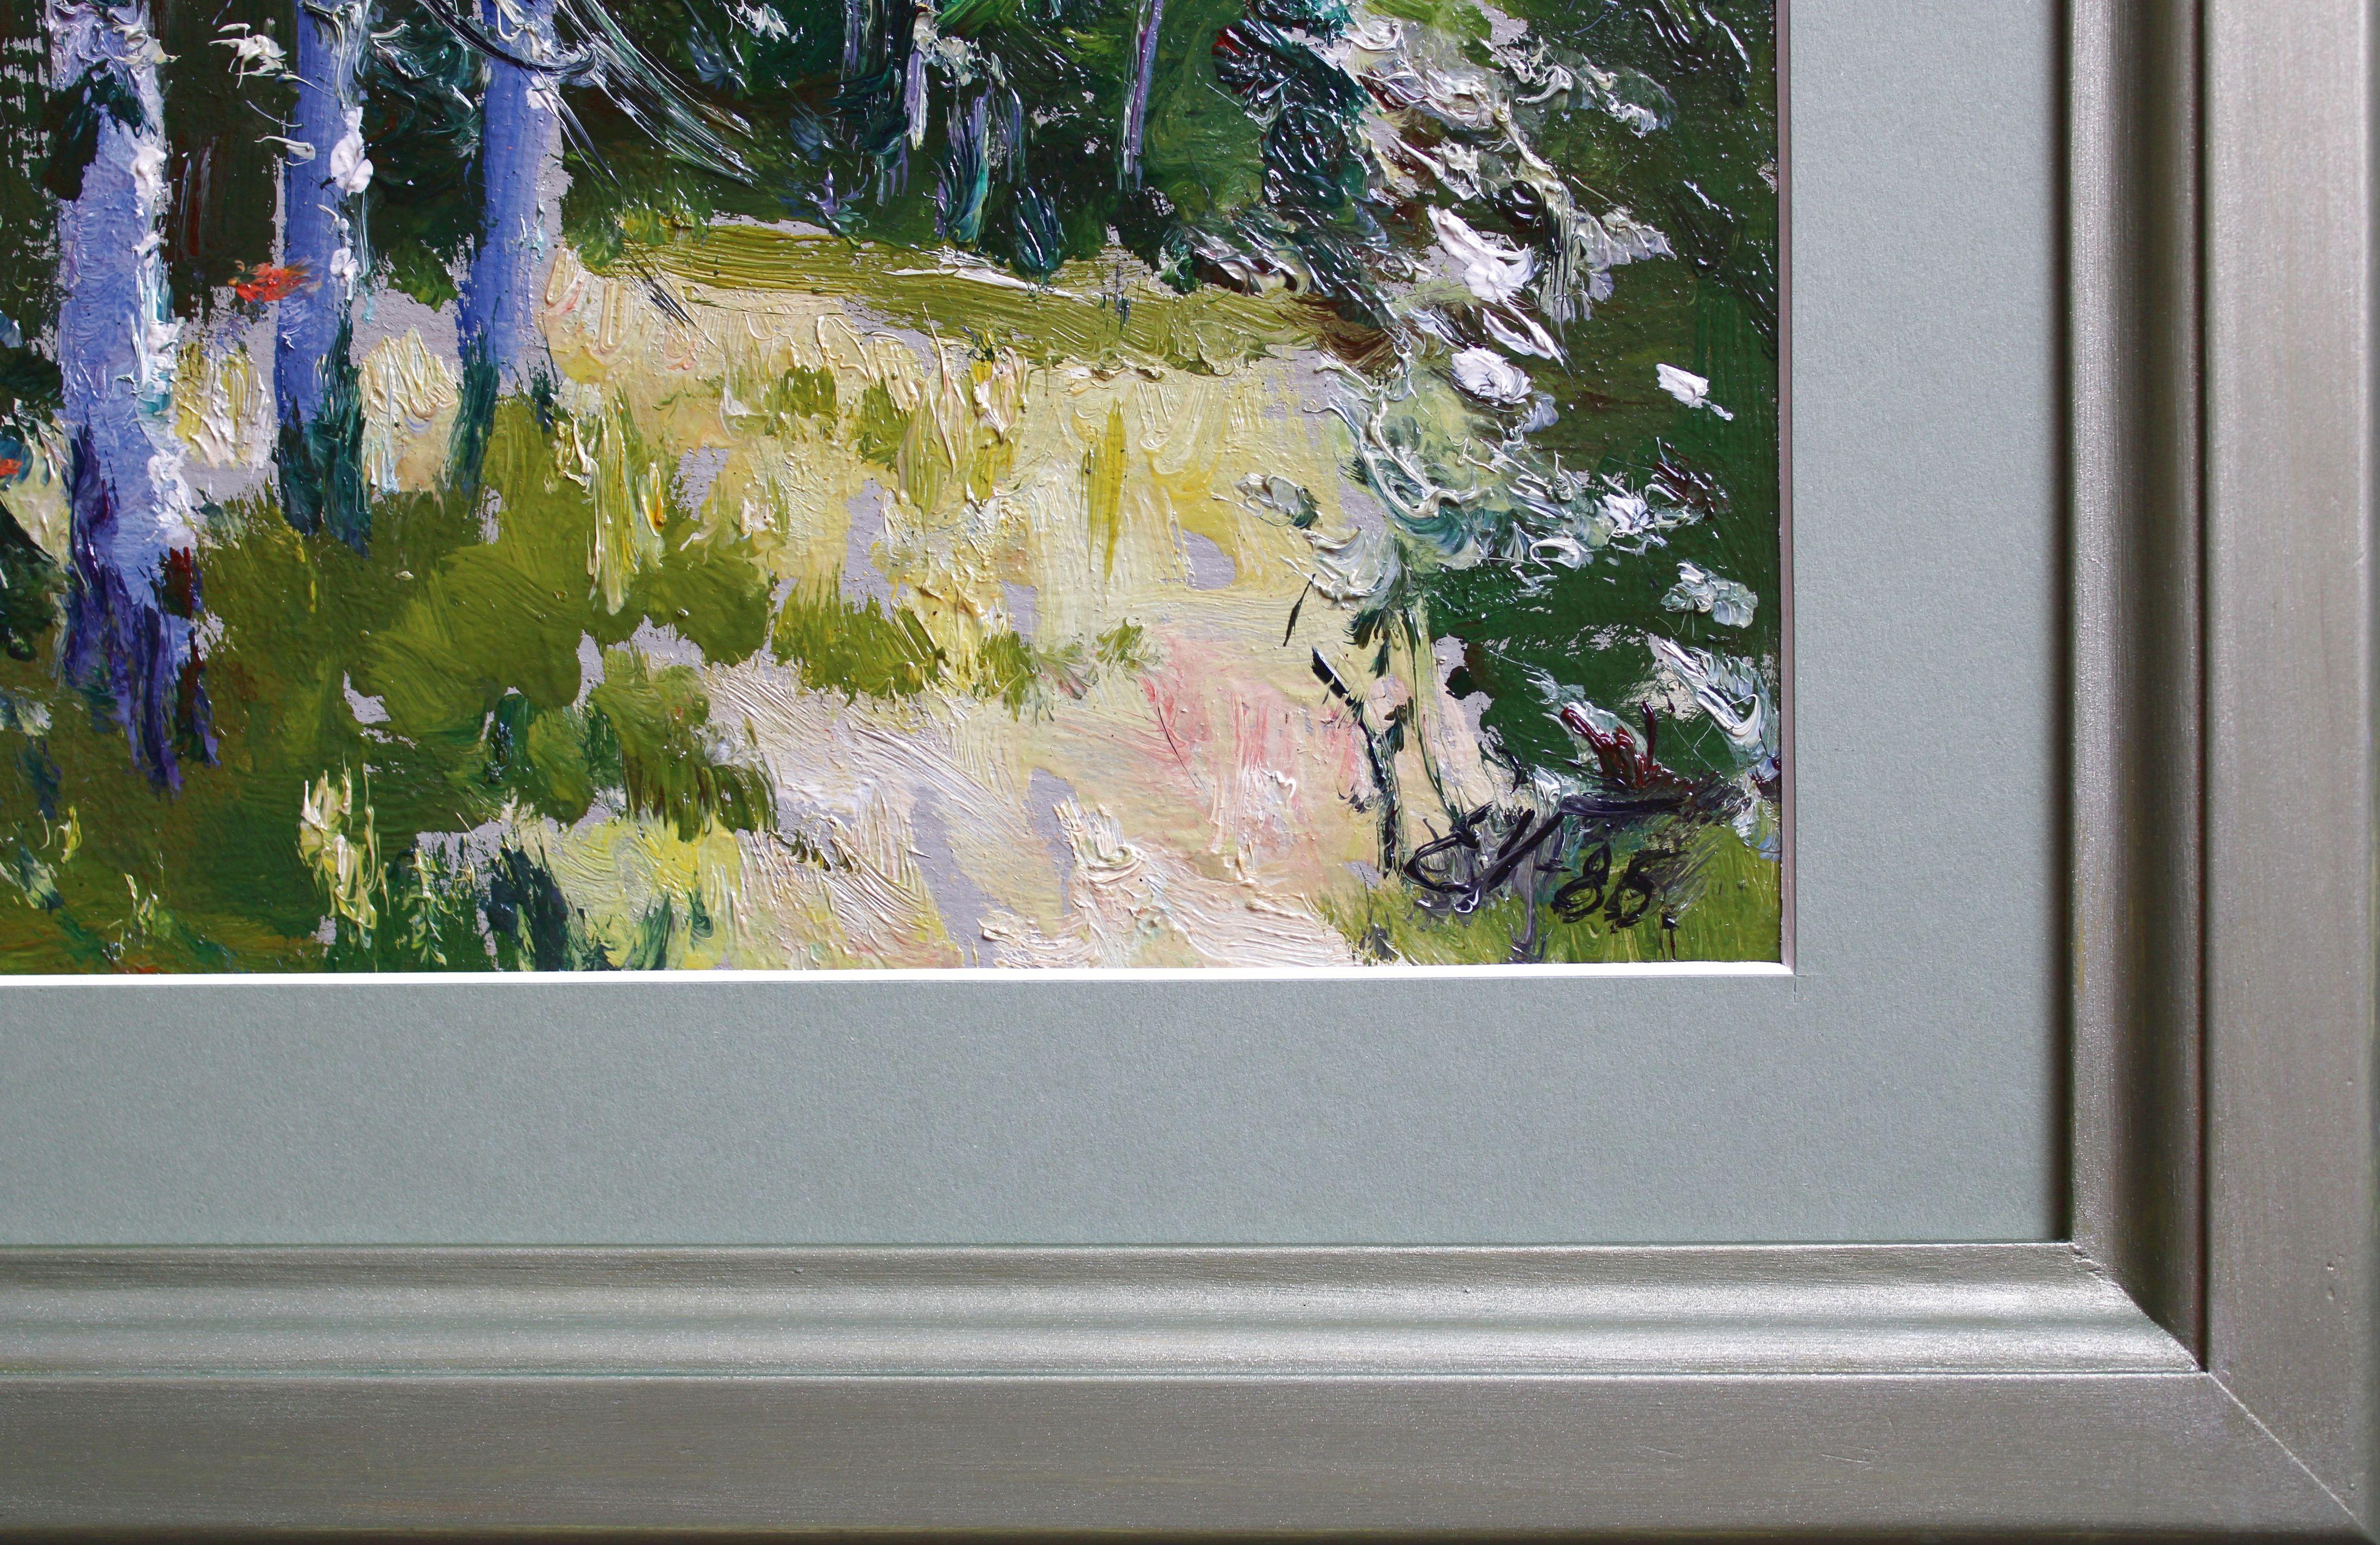 Sunny meadow

1985, cardboard, oil, 21.5x33 cm
